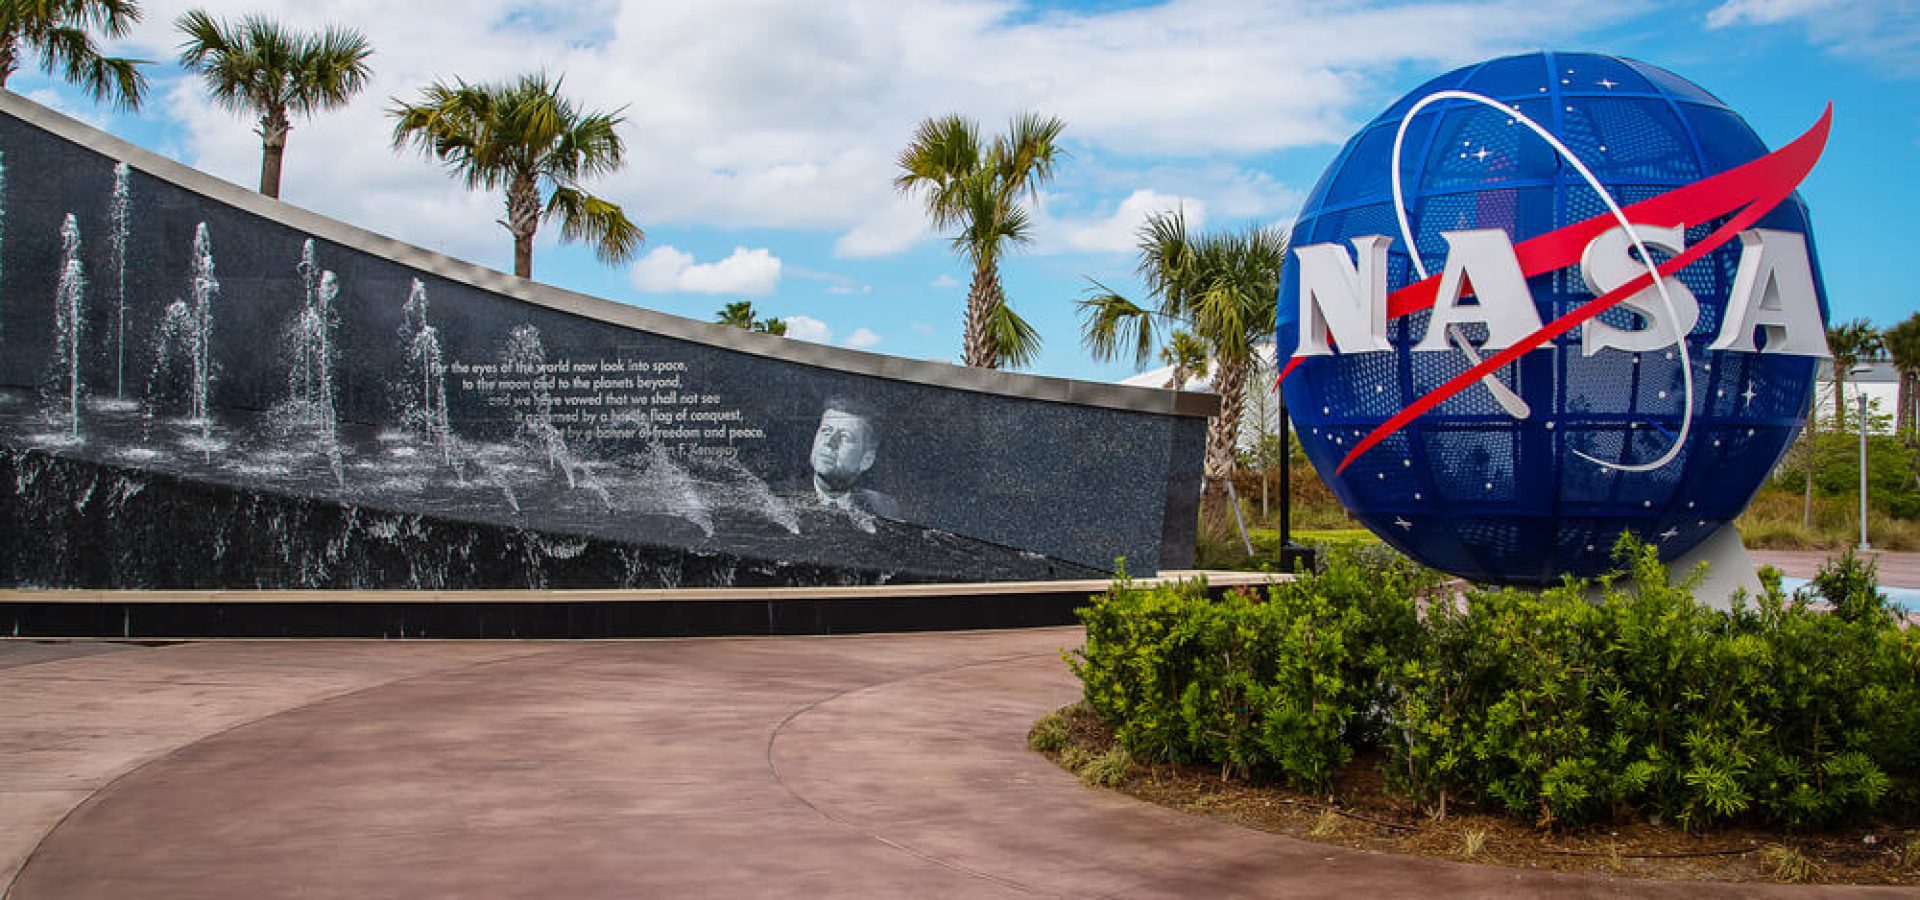 Kennedy memorial next to the Nasa globe.